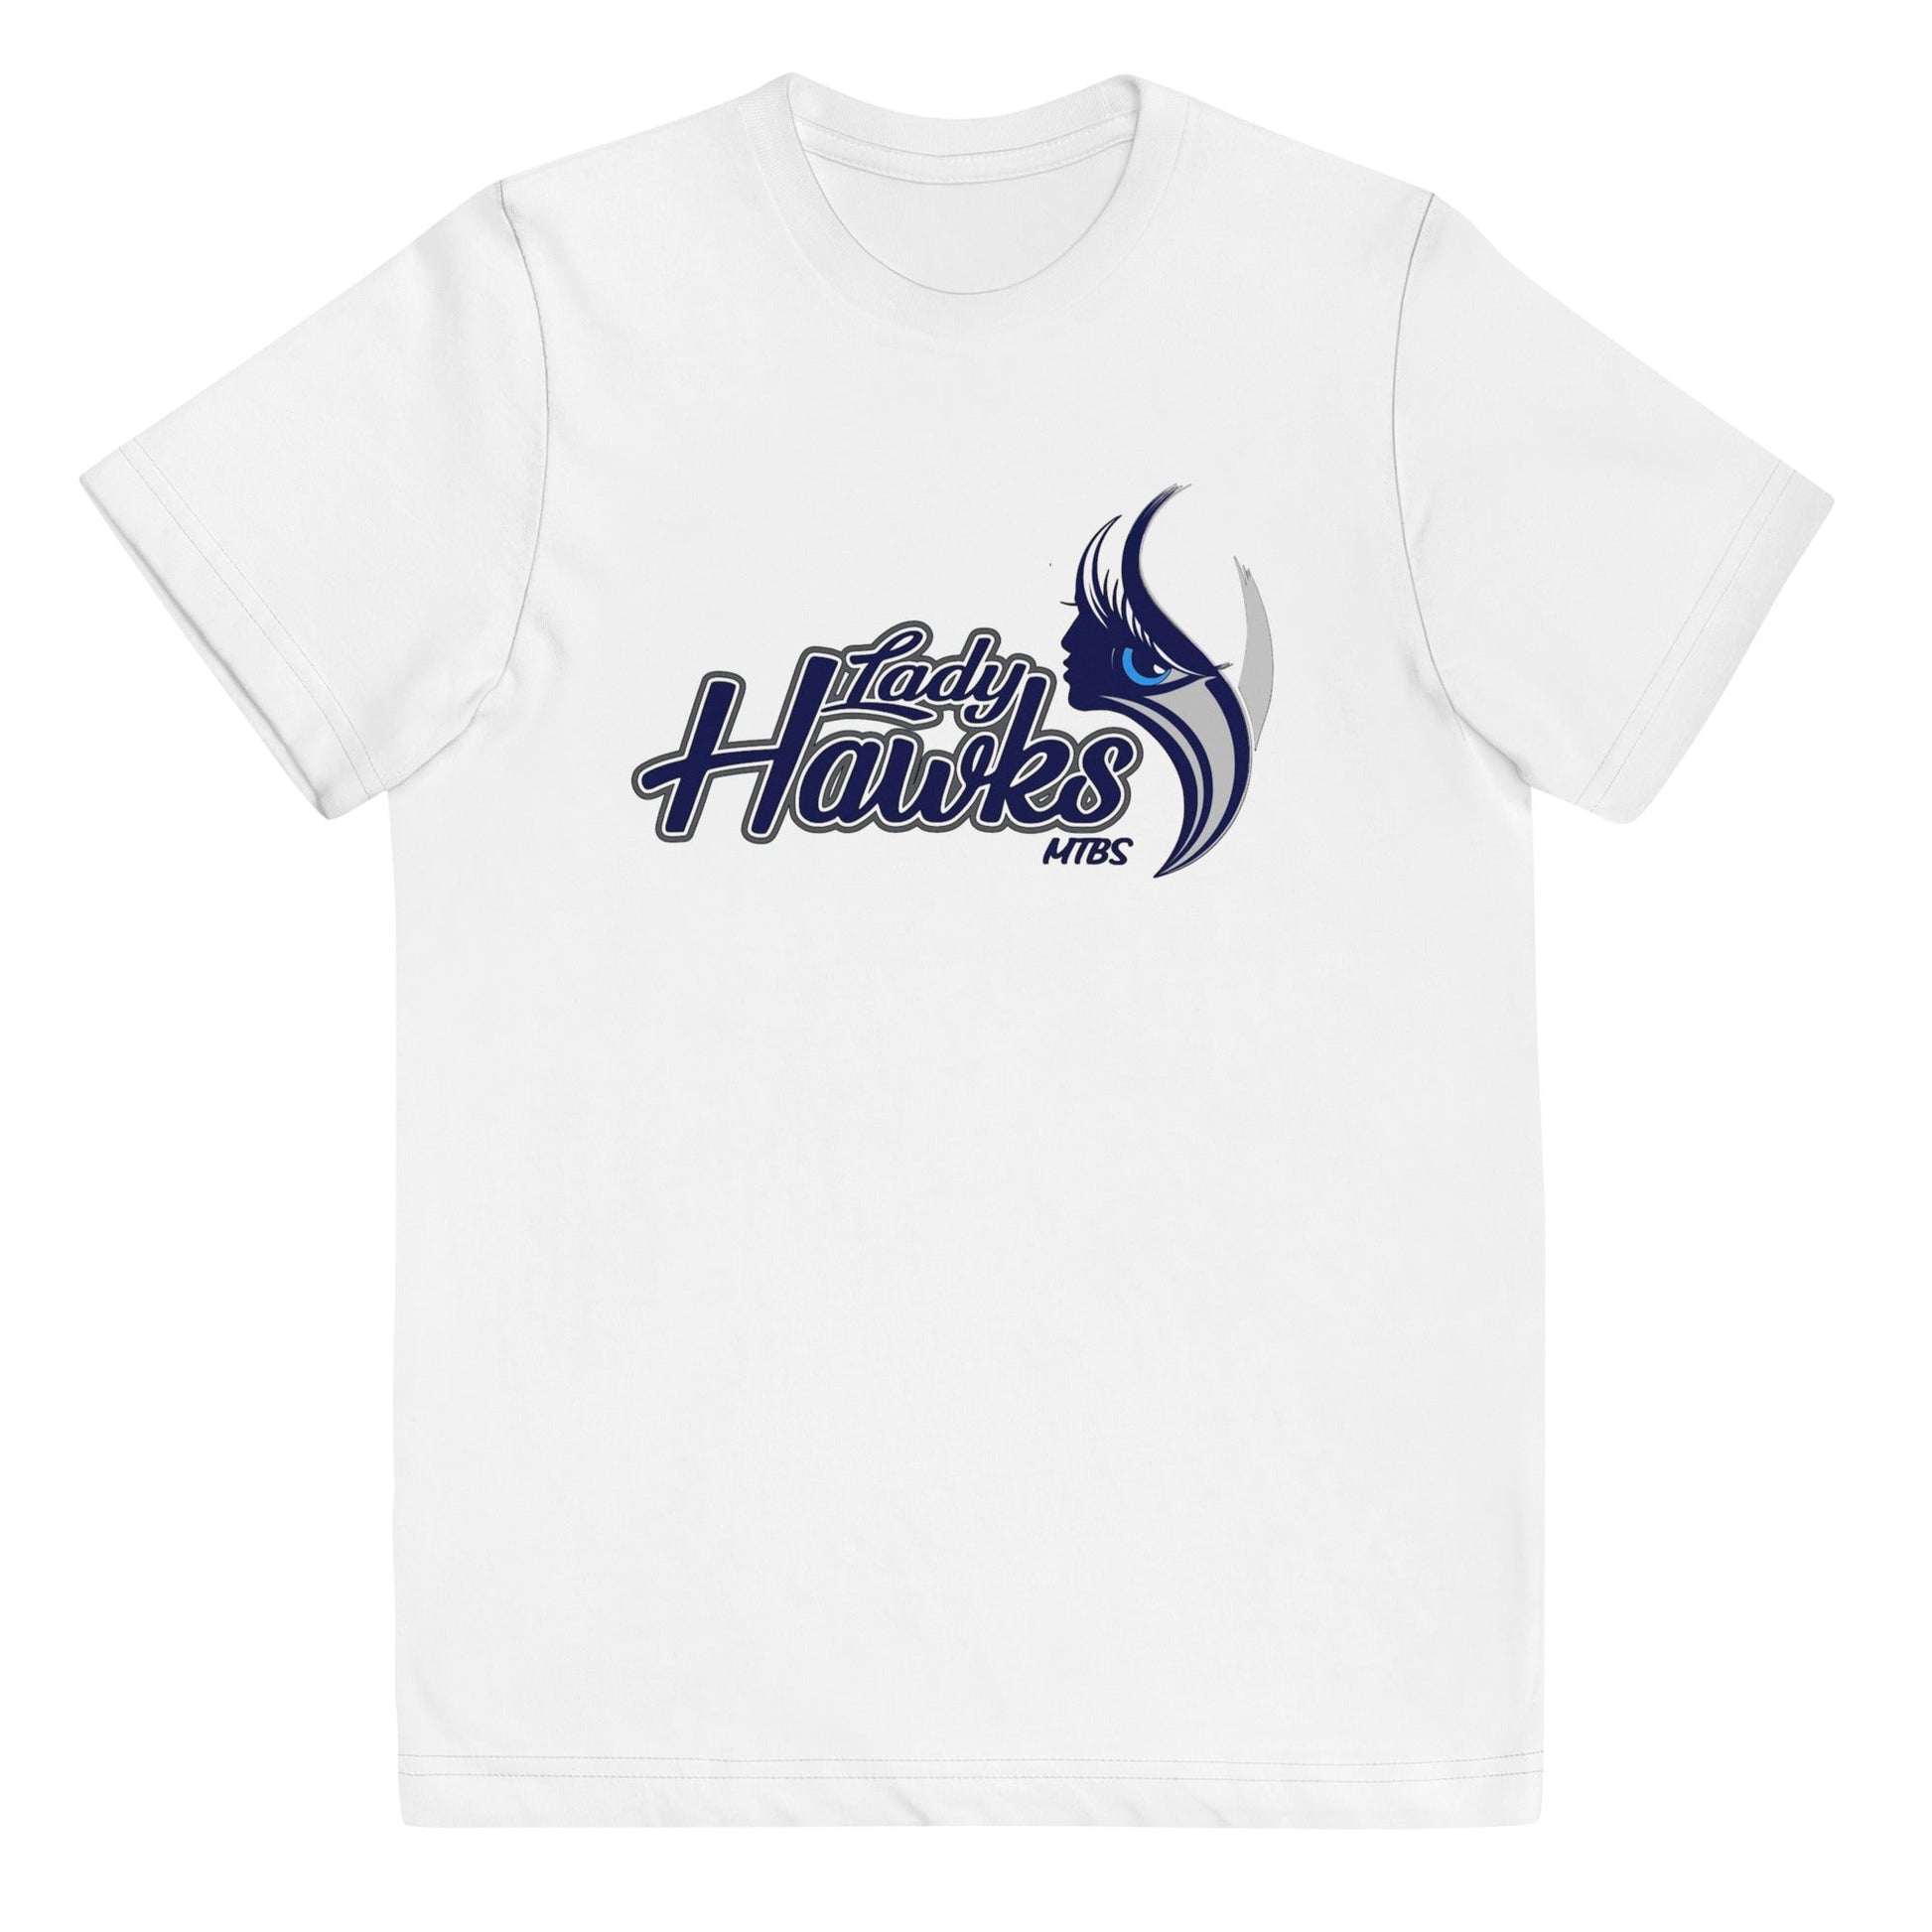 MTBS Lady Hawks Youth jersey t-shirt Bat Club USA